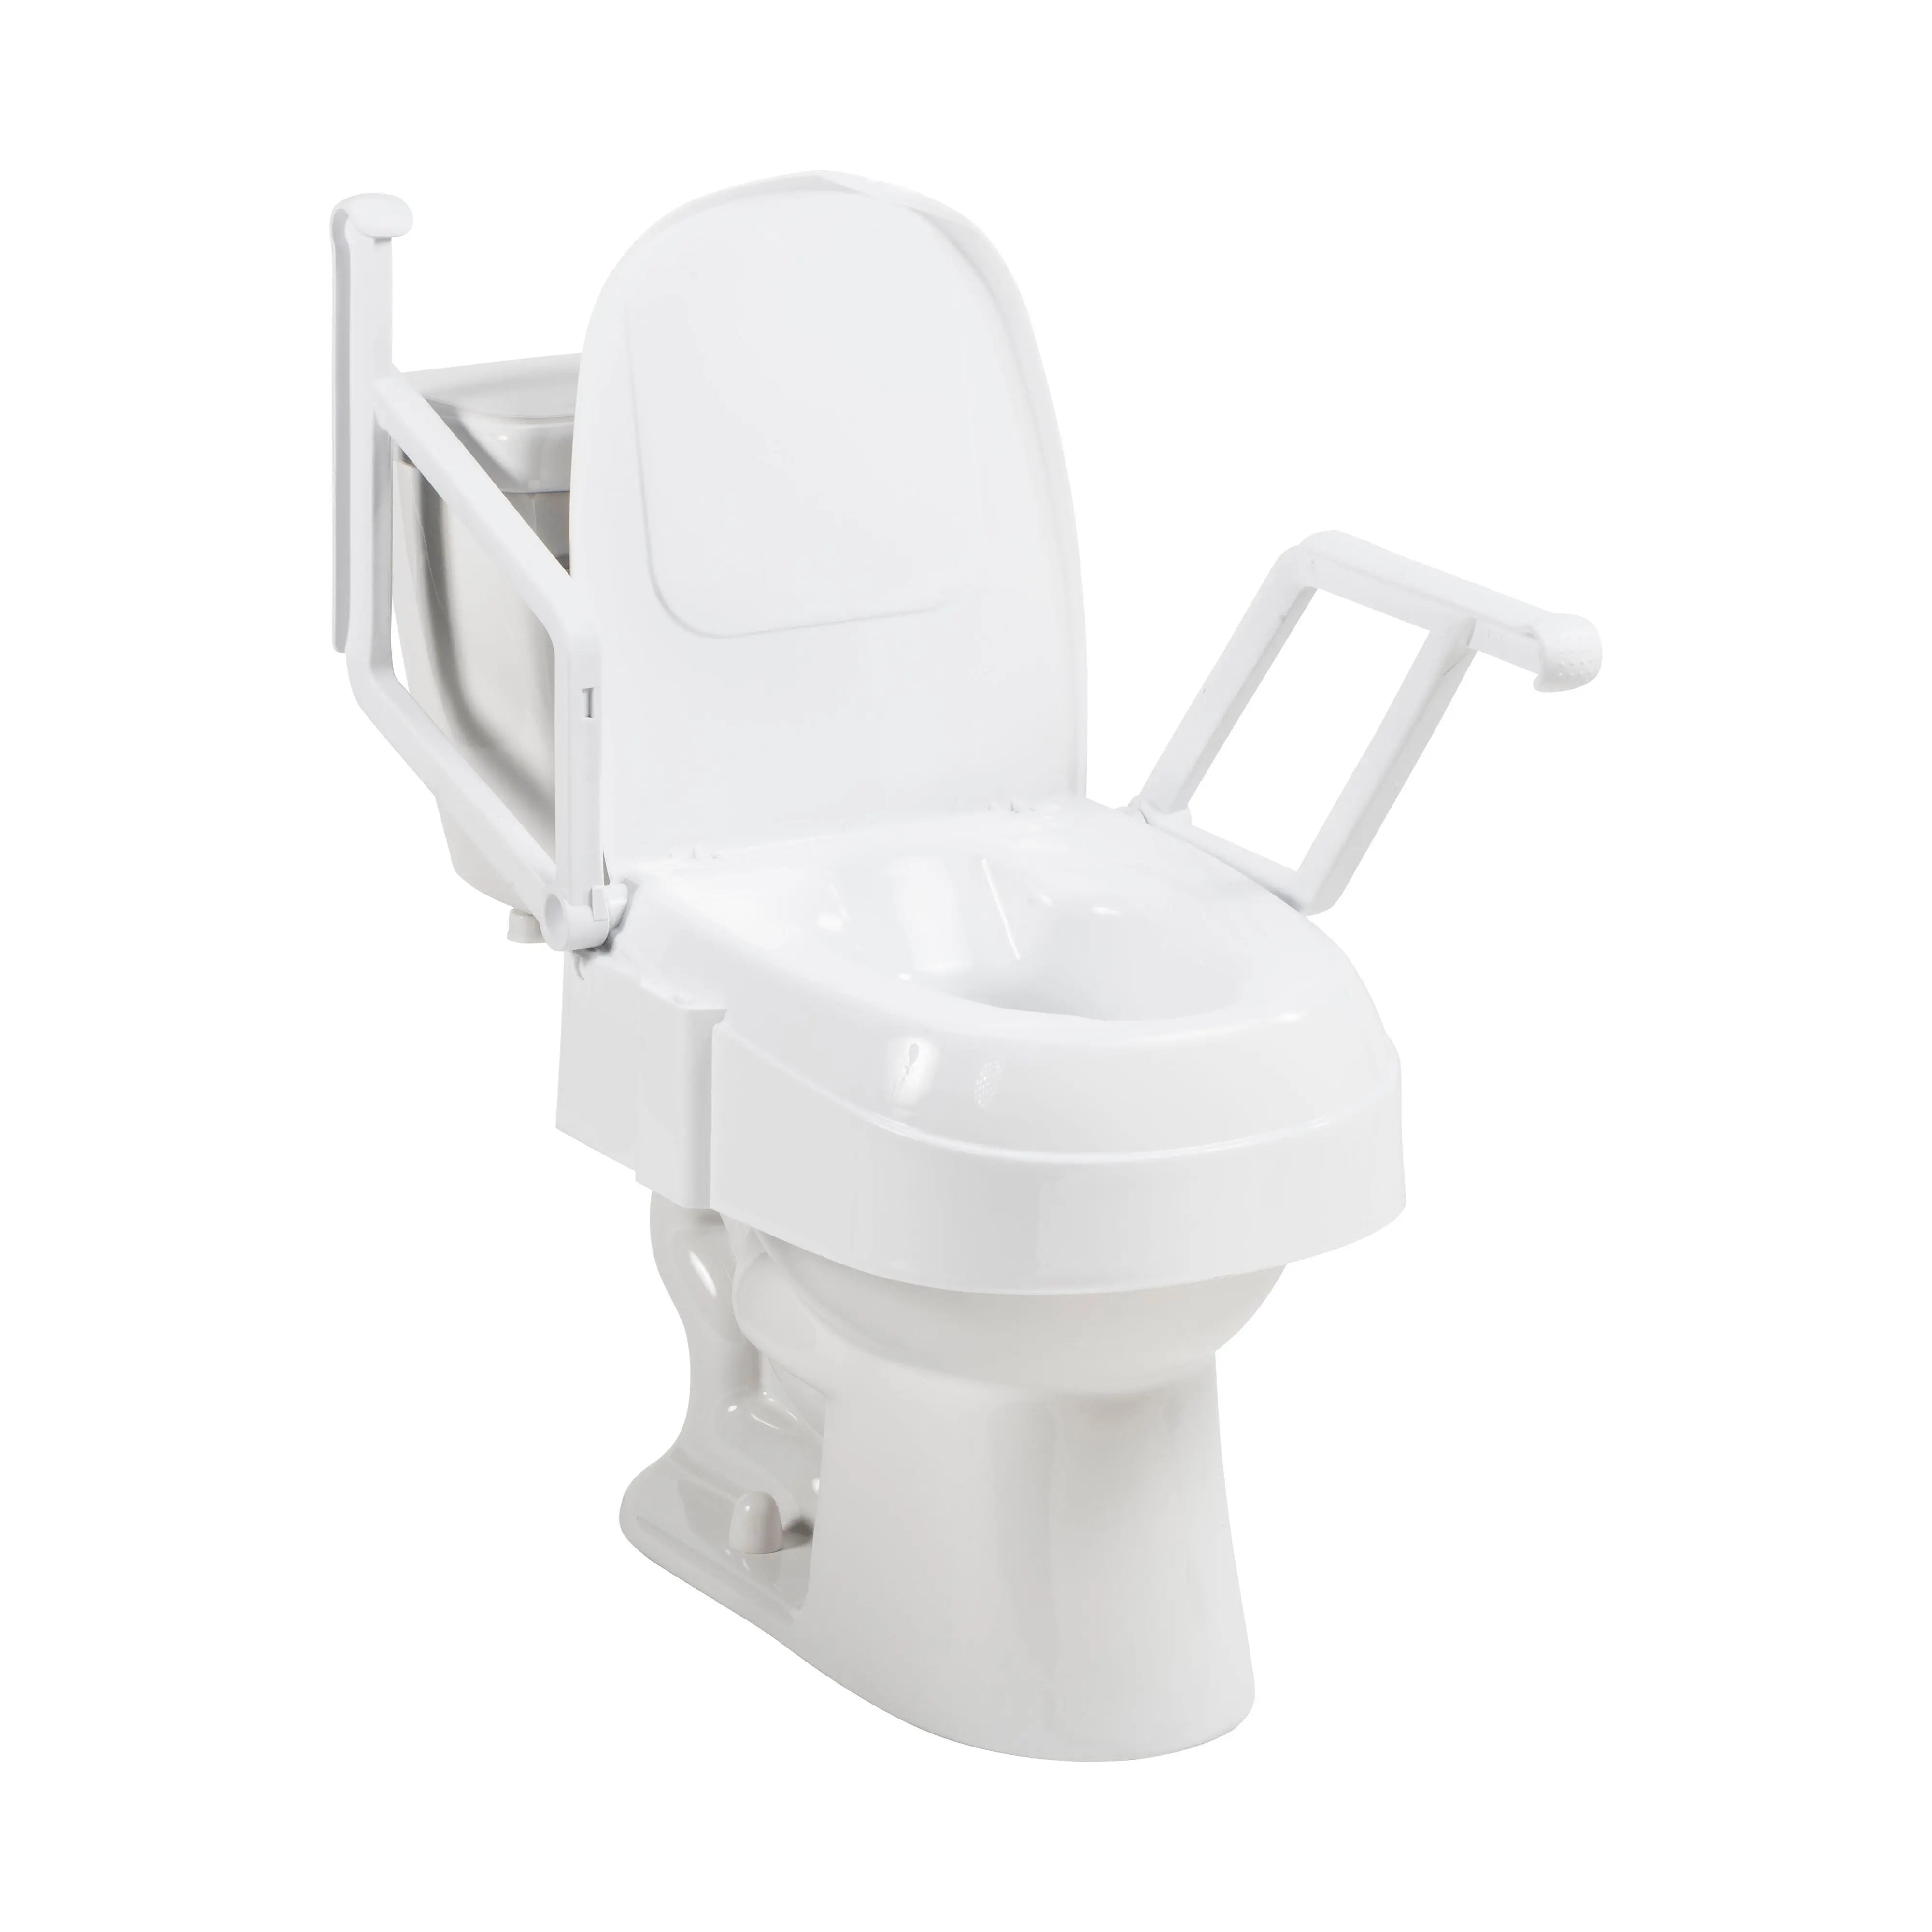 PreserveTech Universal Raised Toilet Seat - Home Health Store Inc